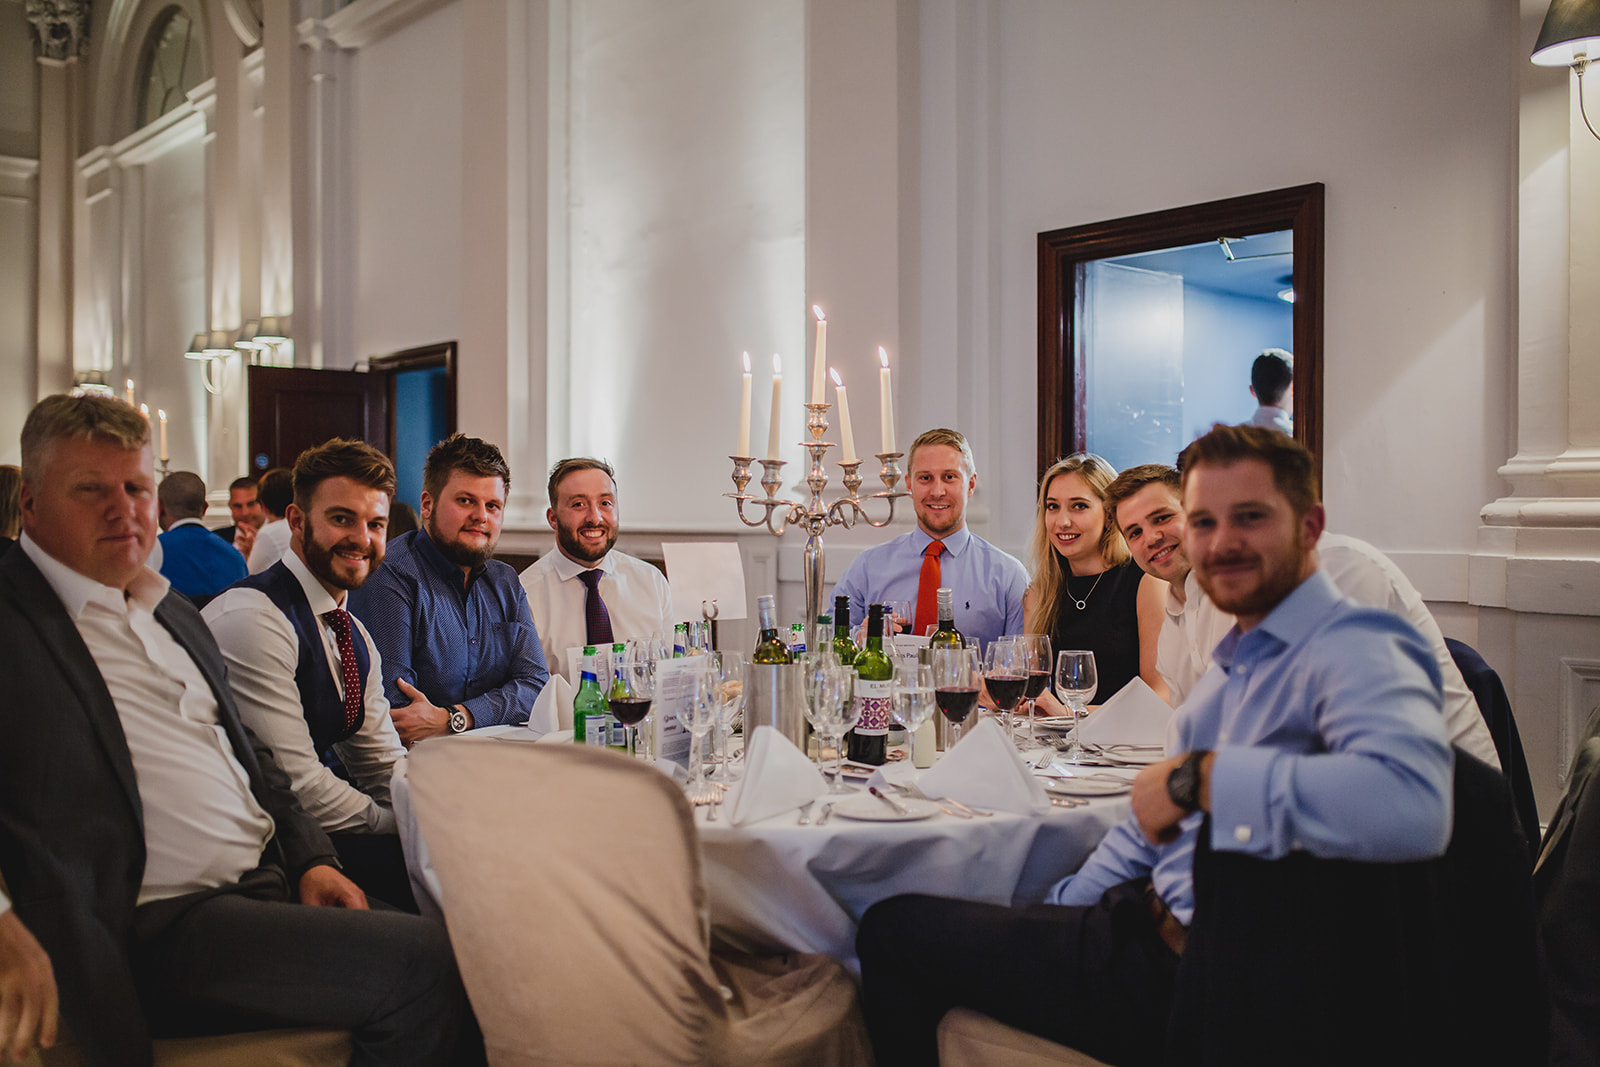 Edinburgh Team Photo at RICS Dinner Event